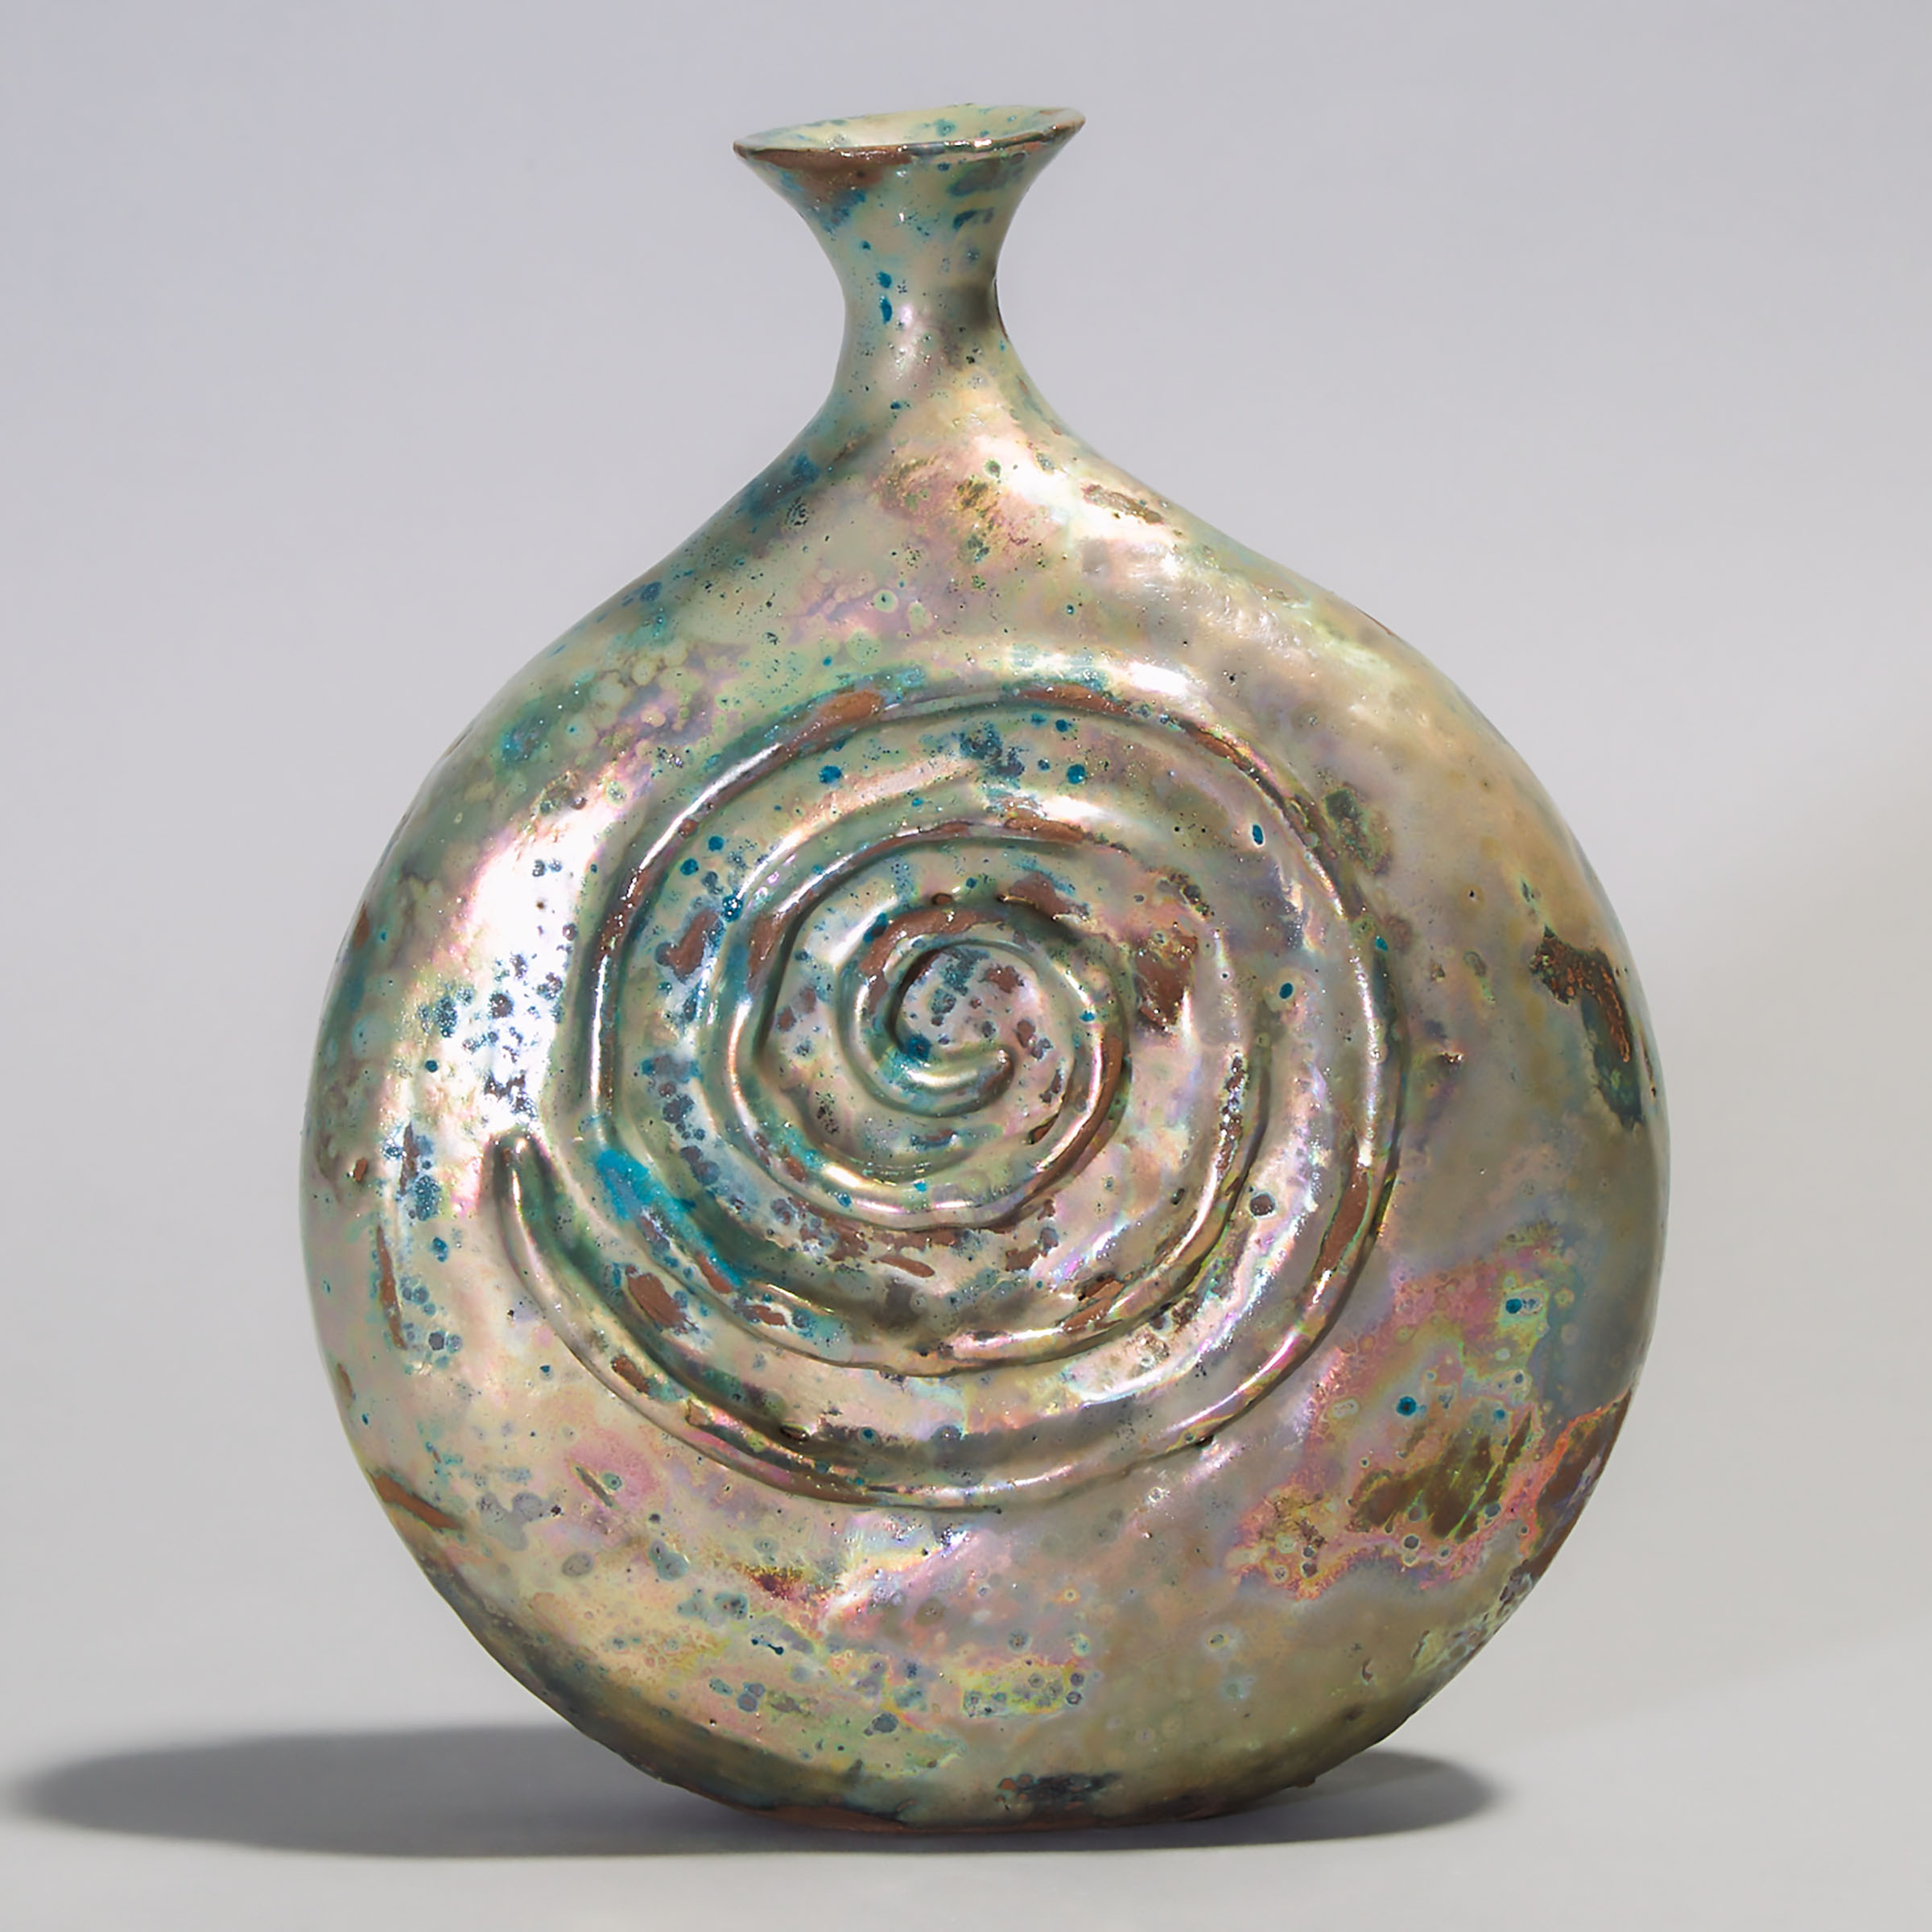 Beatrice Wood (American, 1893-1998), Lustre Glazed Pilgrim Bottle, c.1989